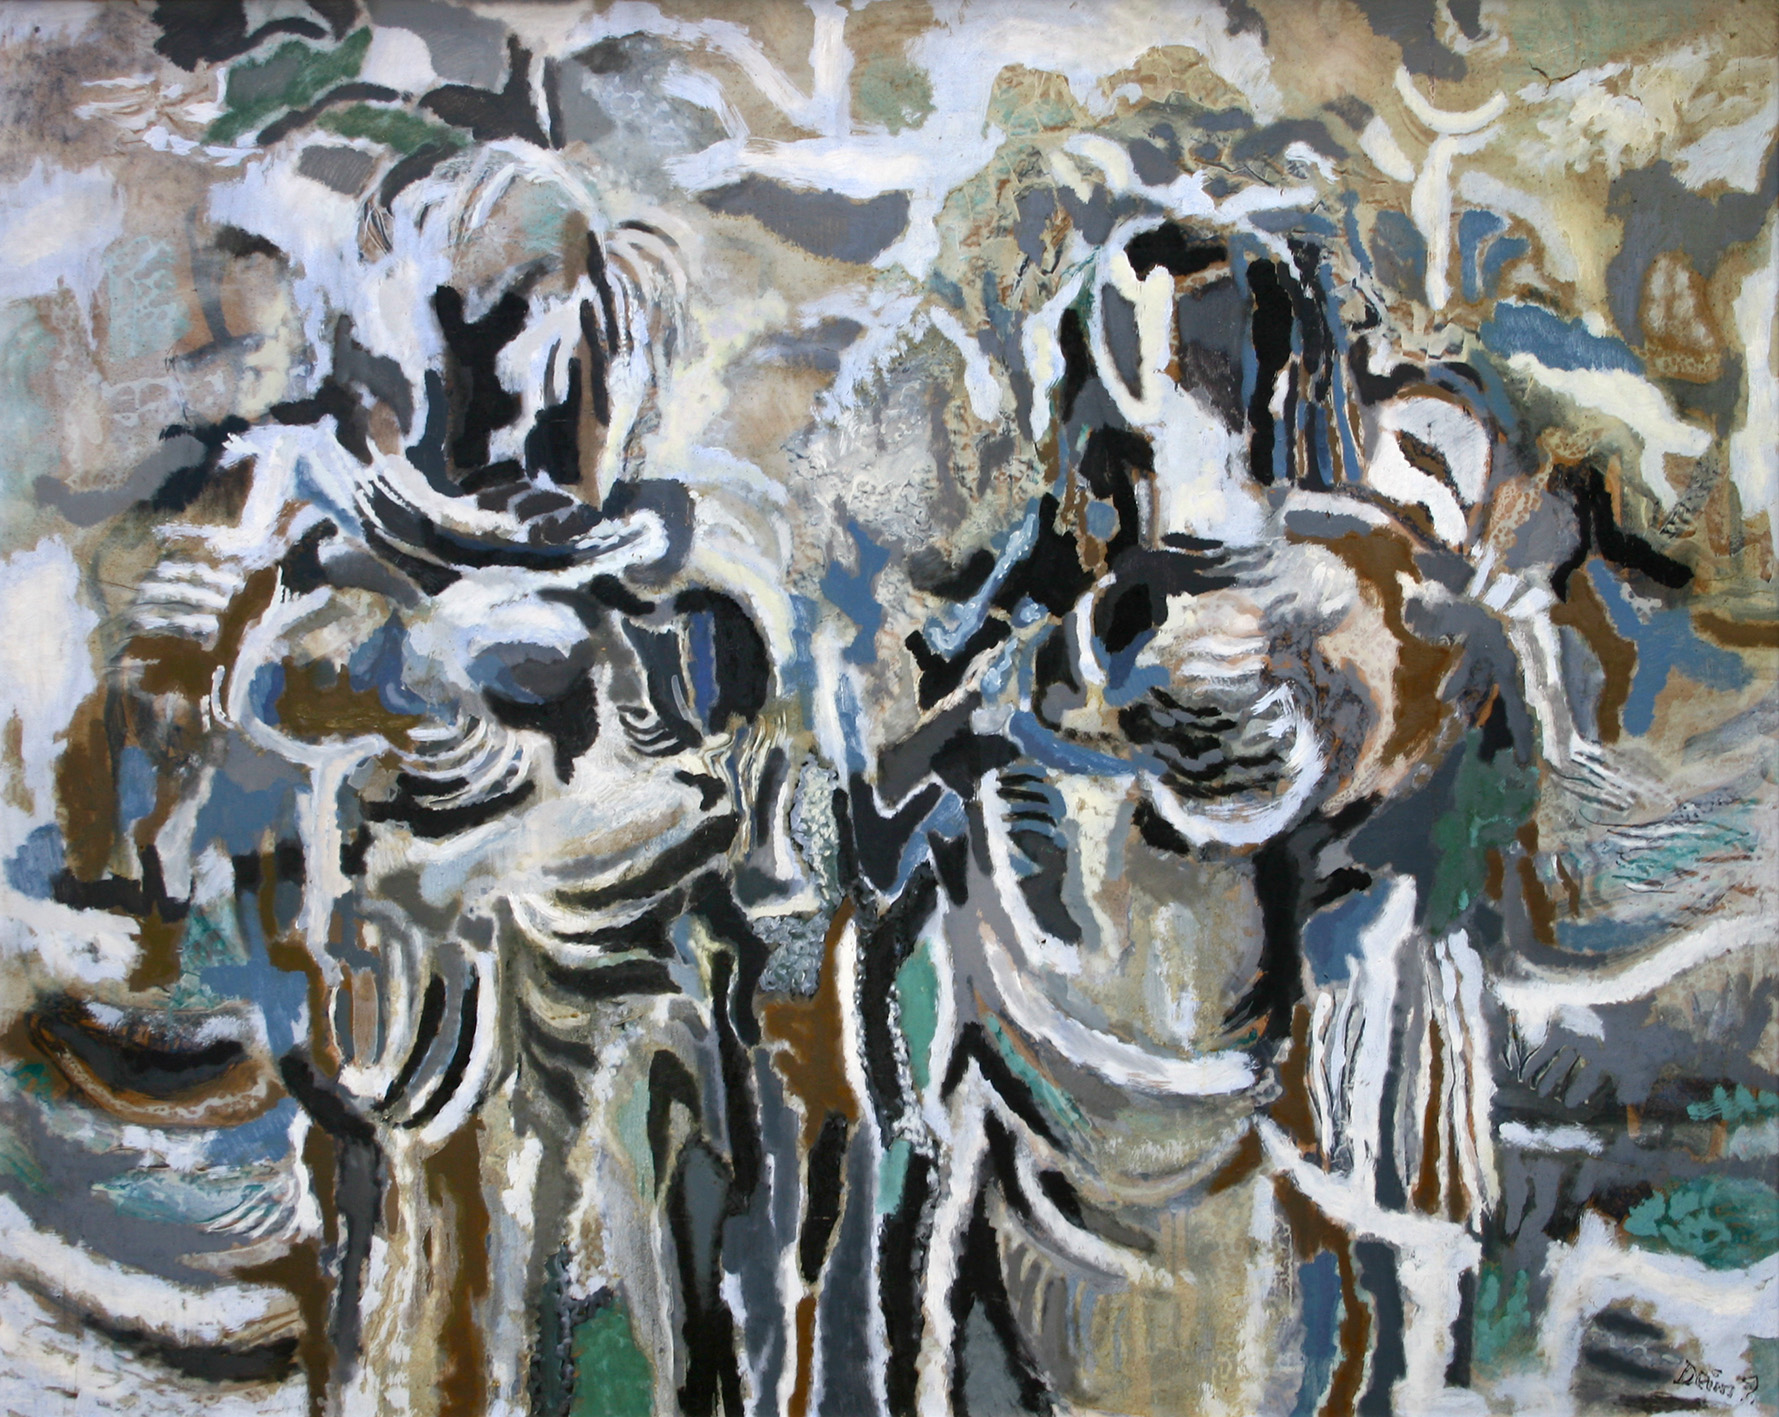 Deim Pál: Két nő, 1965, olaj, farost, 138x170